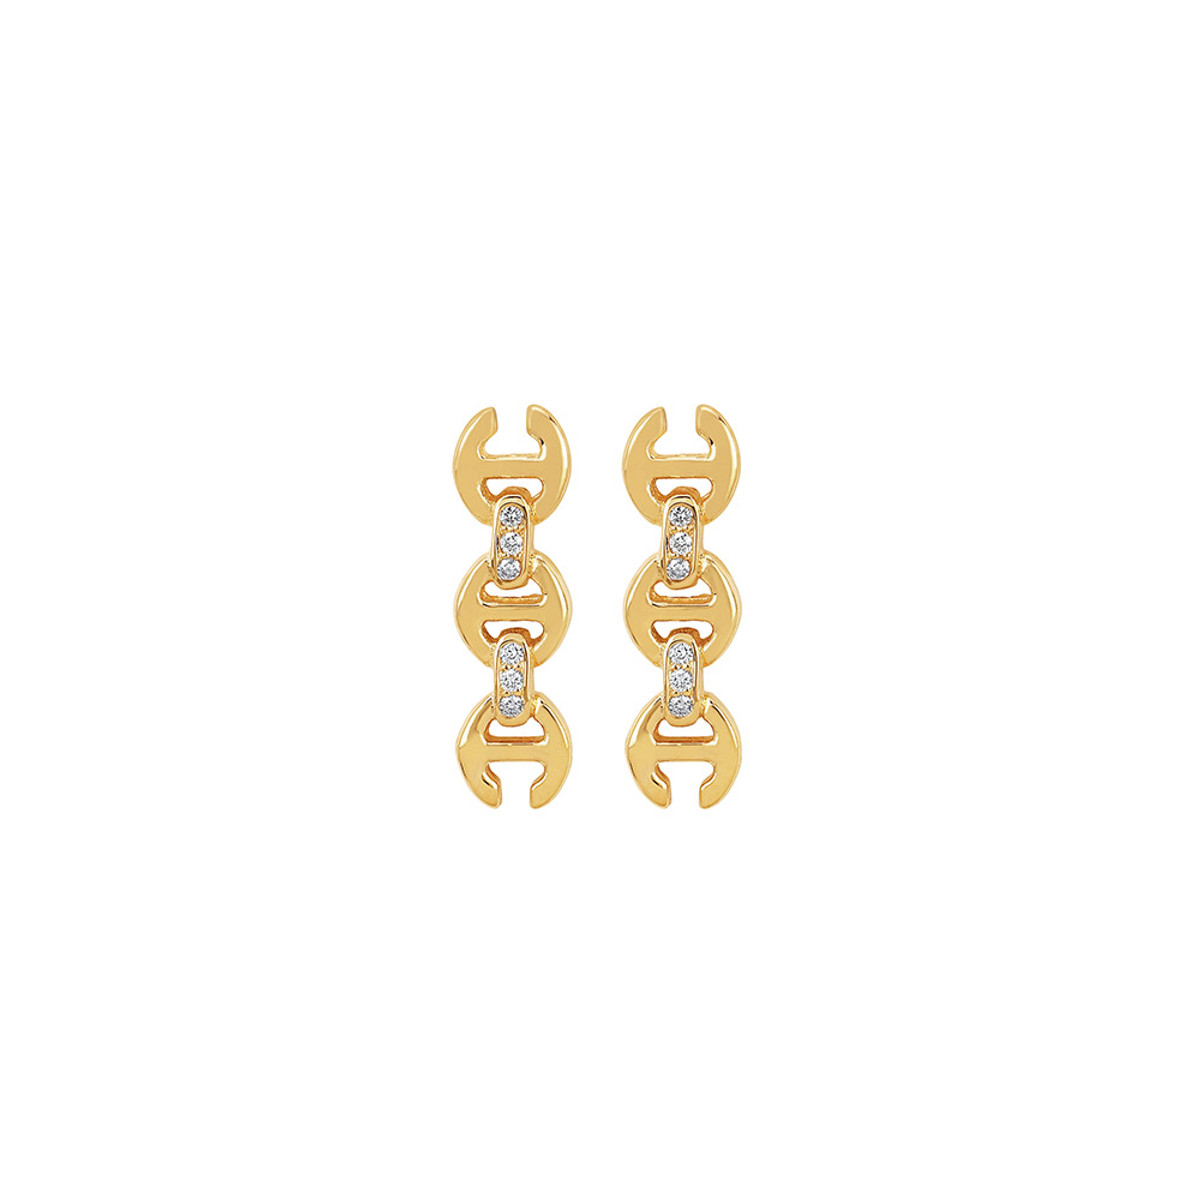 Hoorsenbuhs 18K Yellow Gold 3MM Toggle Stud Earrings with Diamonds-57476 Product Image